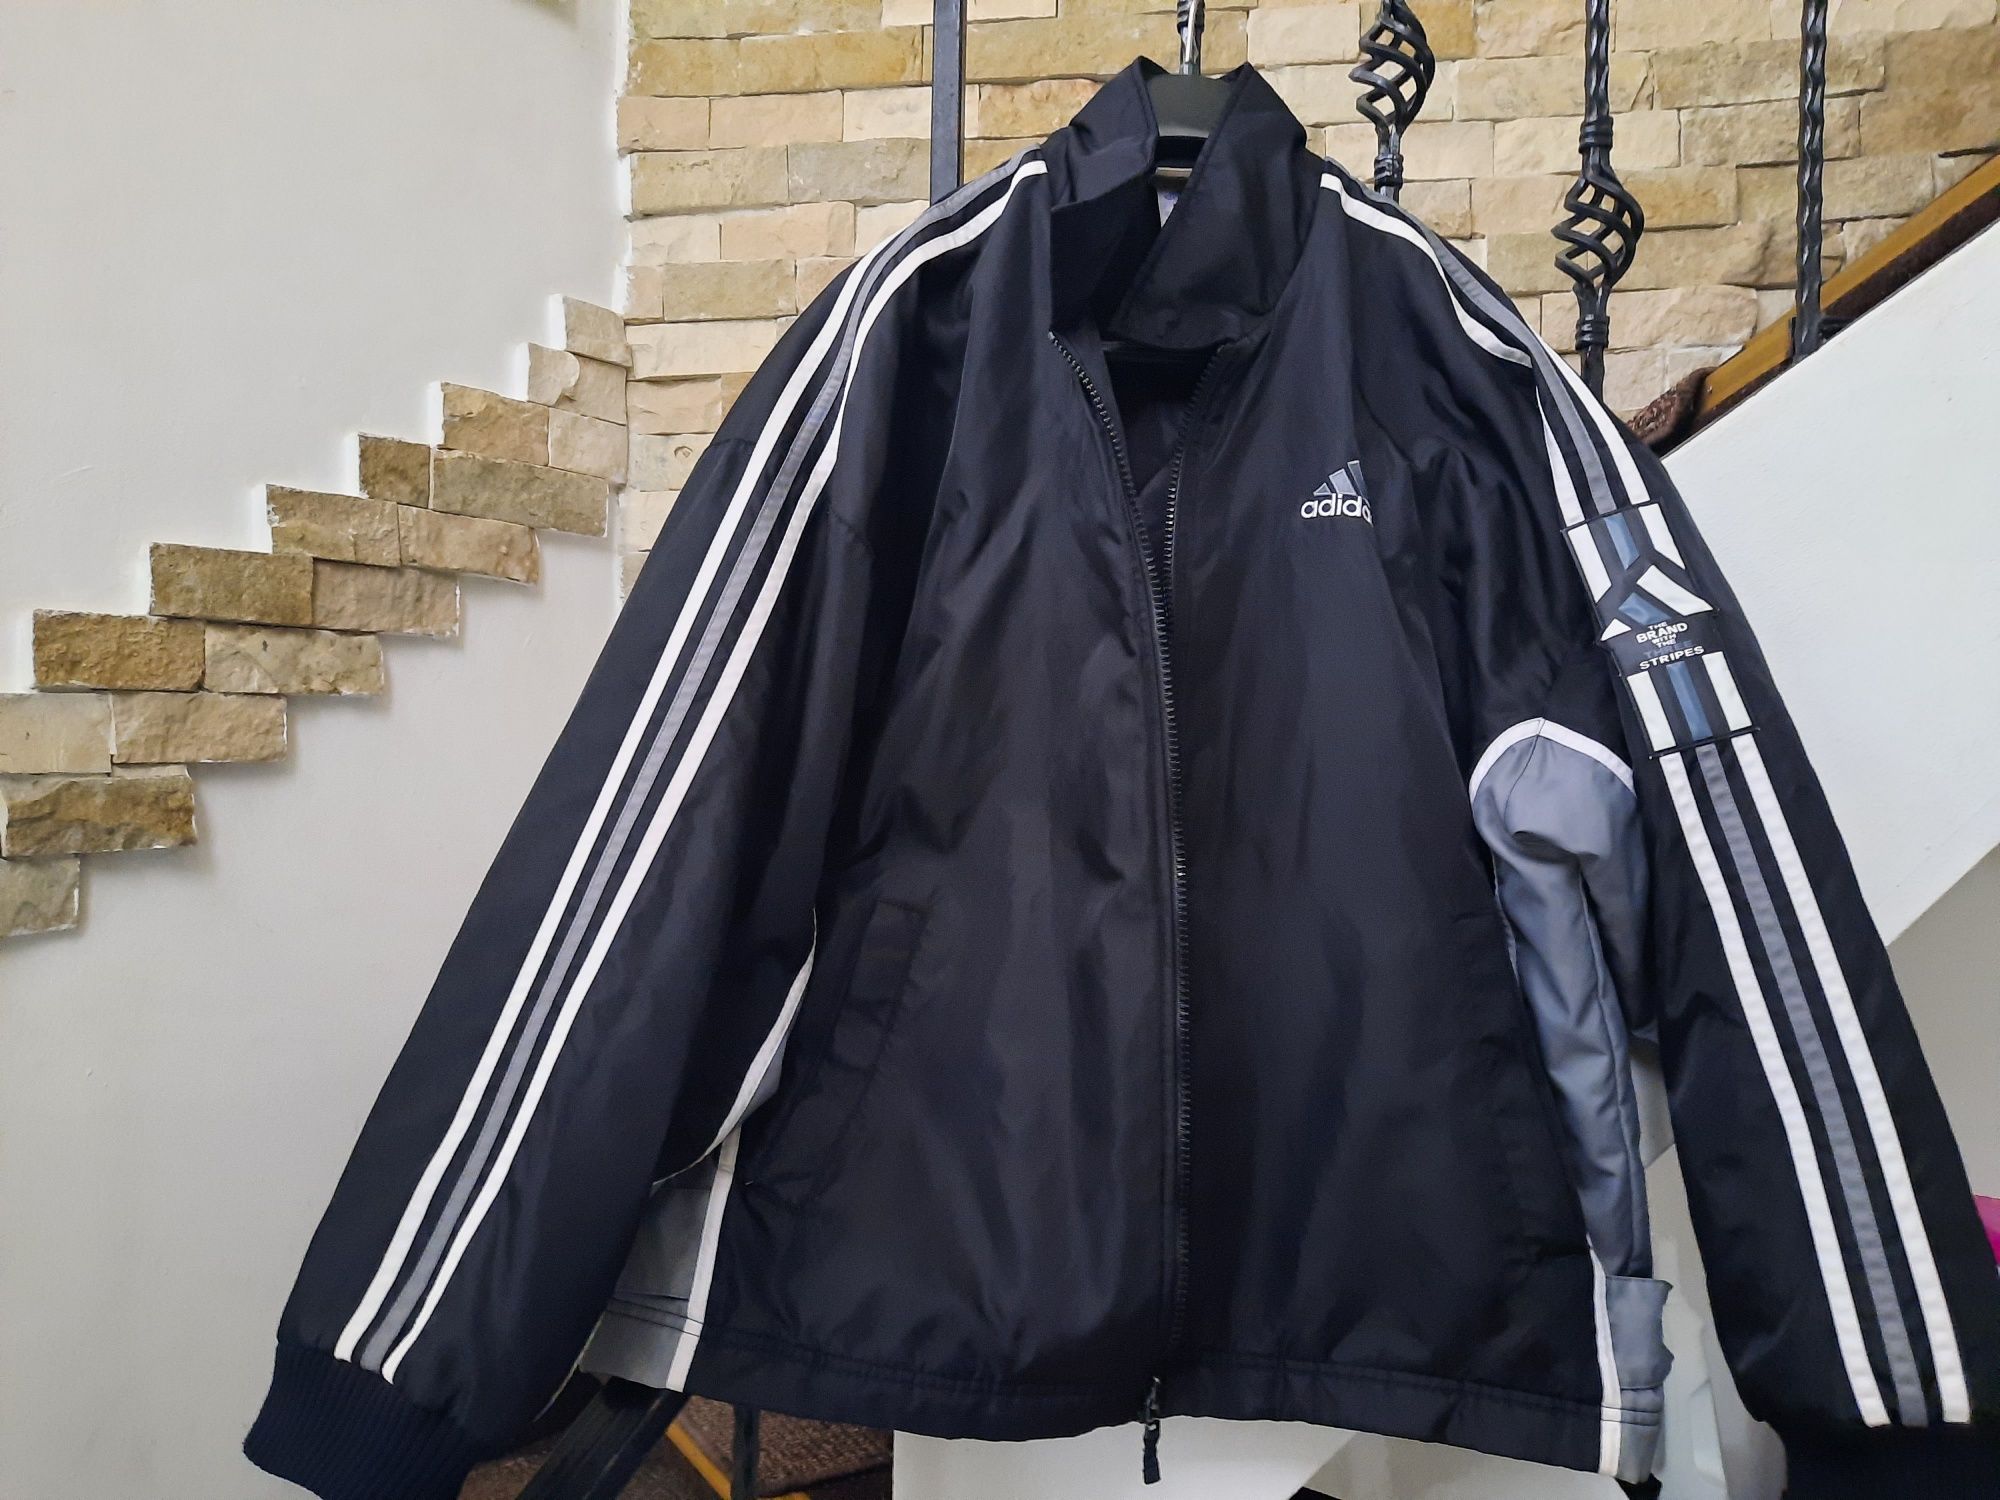 Jacheta originala Adidas L, XL, Jachete de fas gros si subtire, L/ XL